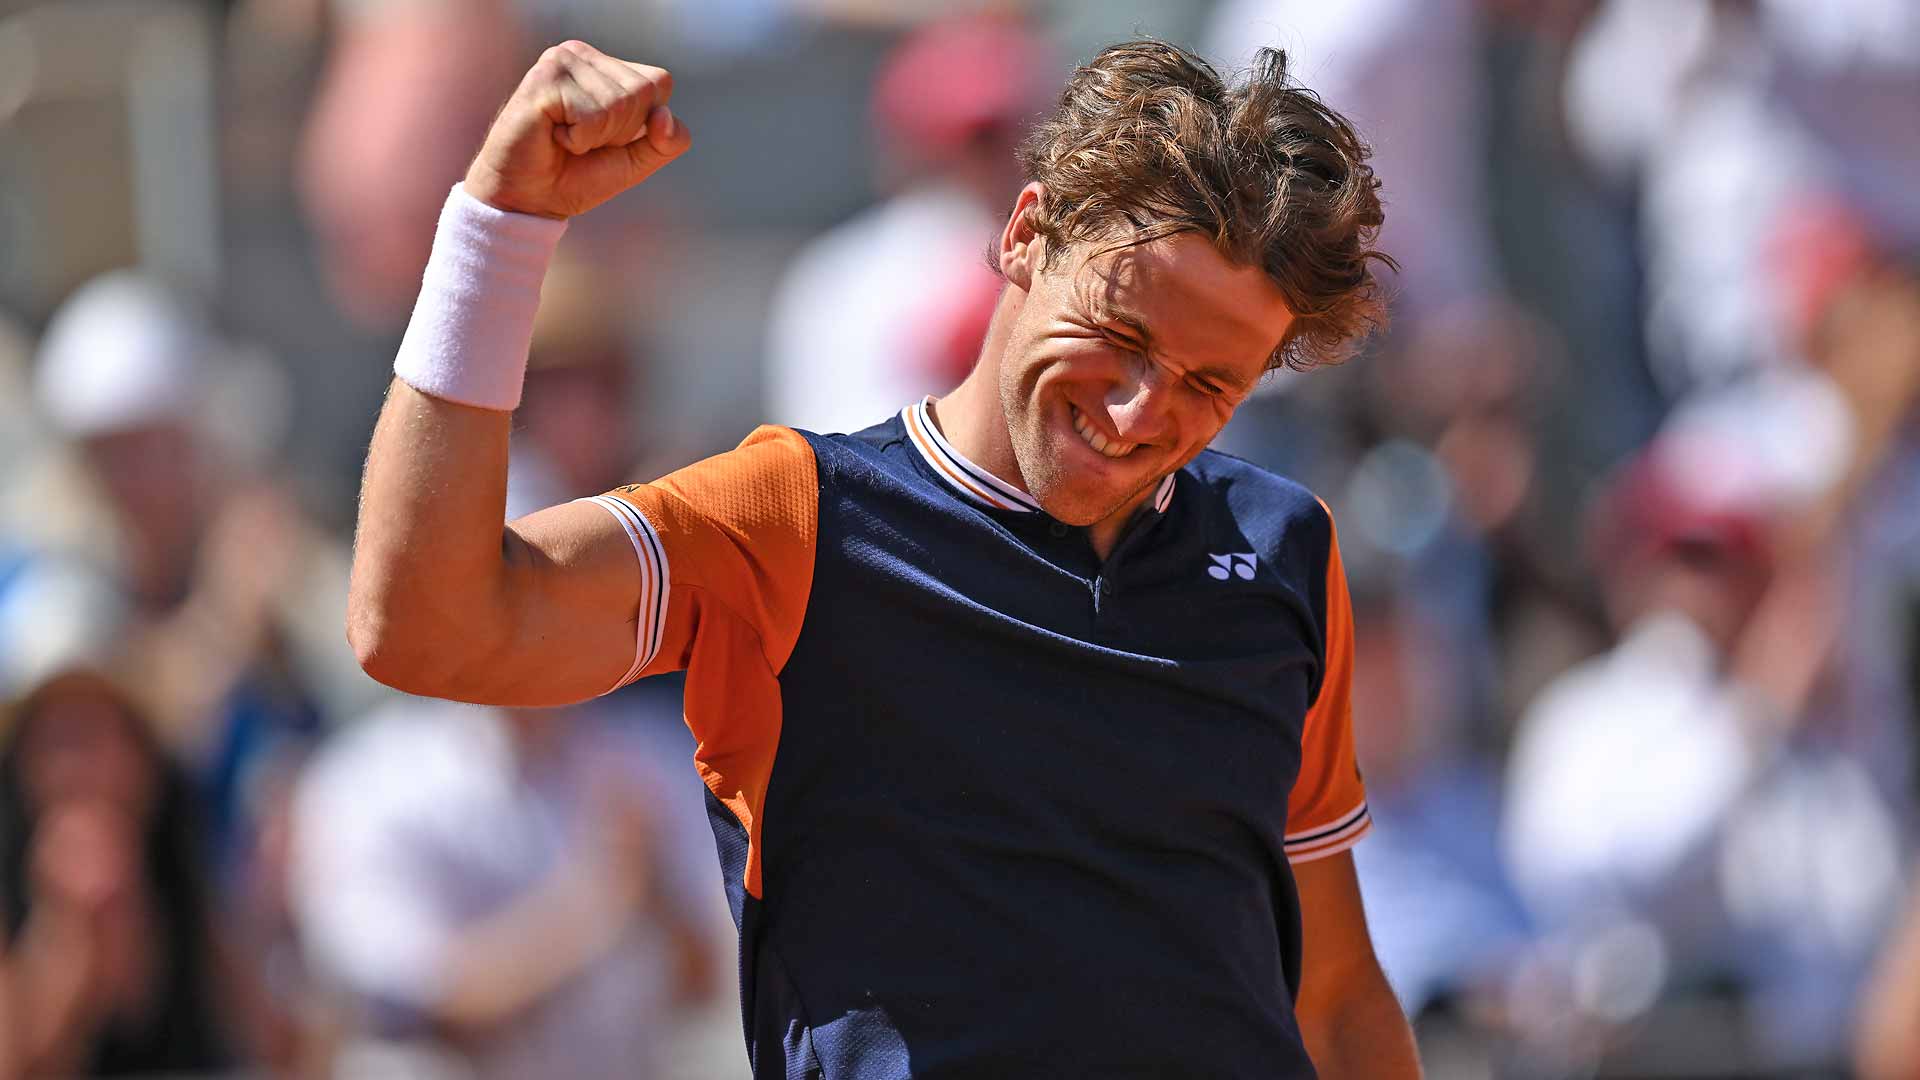 Casper Ruud celebrates after defeating Nicolas Jarry on Monday at Roland Garros to reach his third major quarter-final.